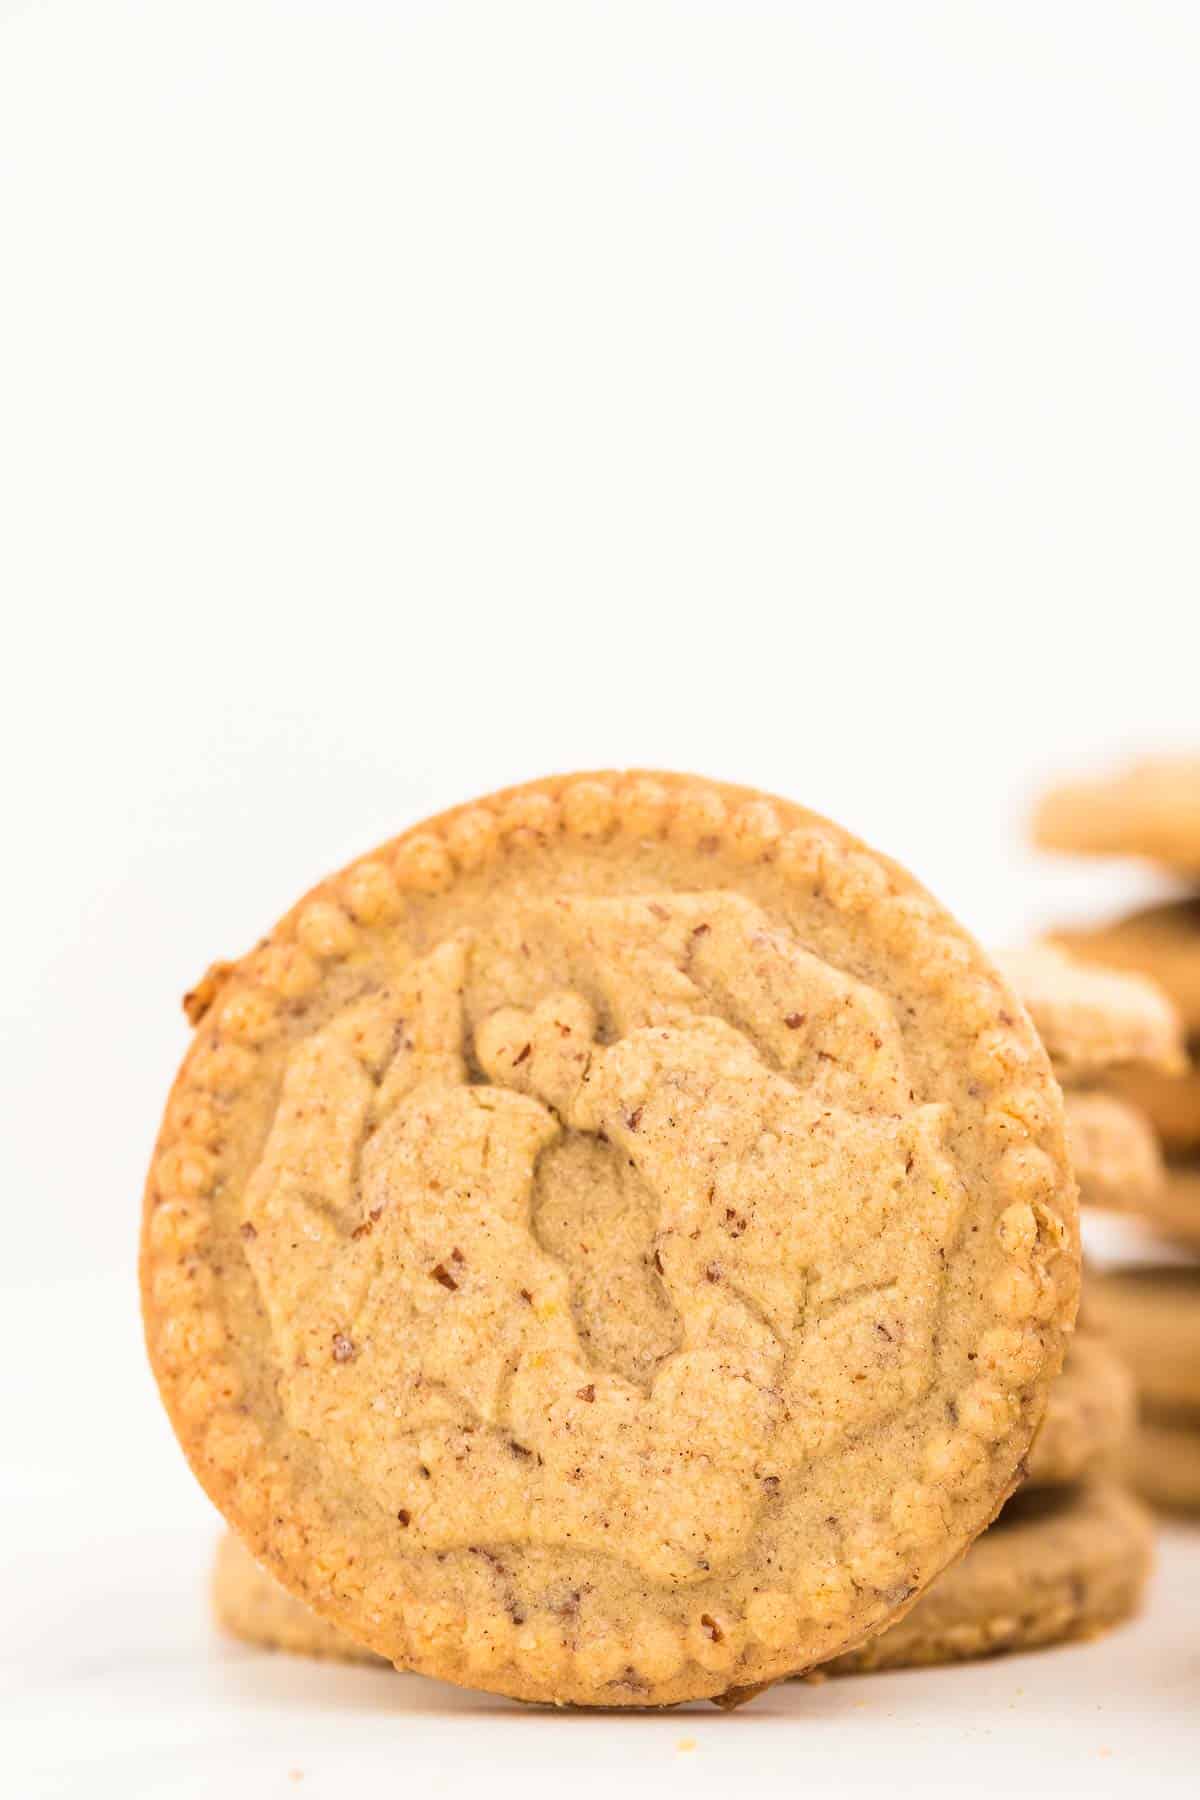 a closeup of a round, stamped Spekulatius Cookie (German Spiced Cookie)